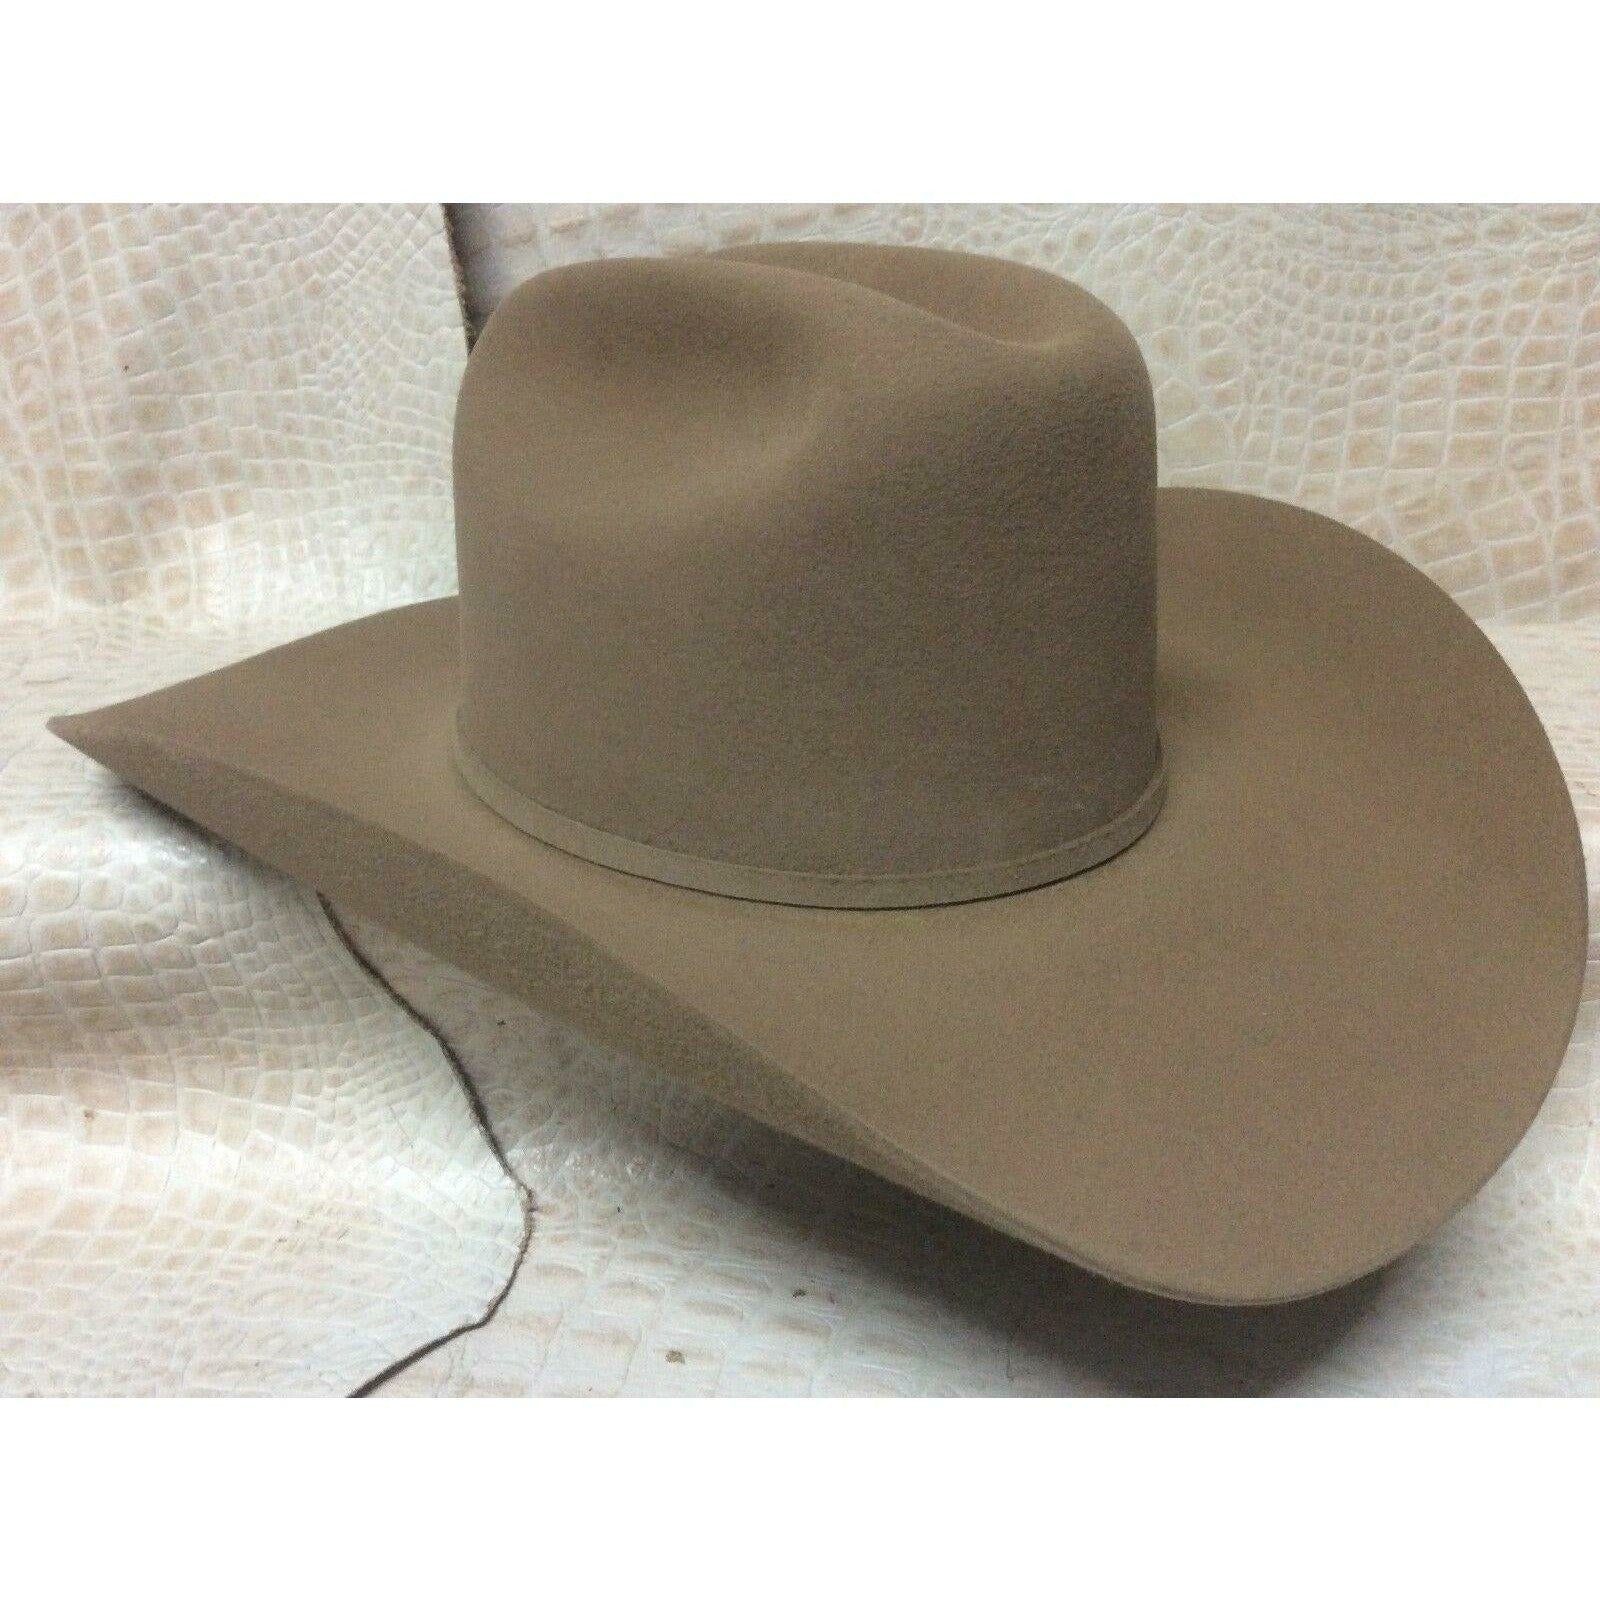 New Stetson Skyline Sahara 6X Beaver Fur Felt Western Rodeo Riding Cowboy Hat - CWesternwear